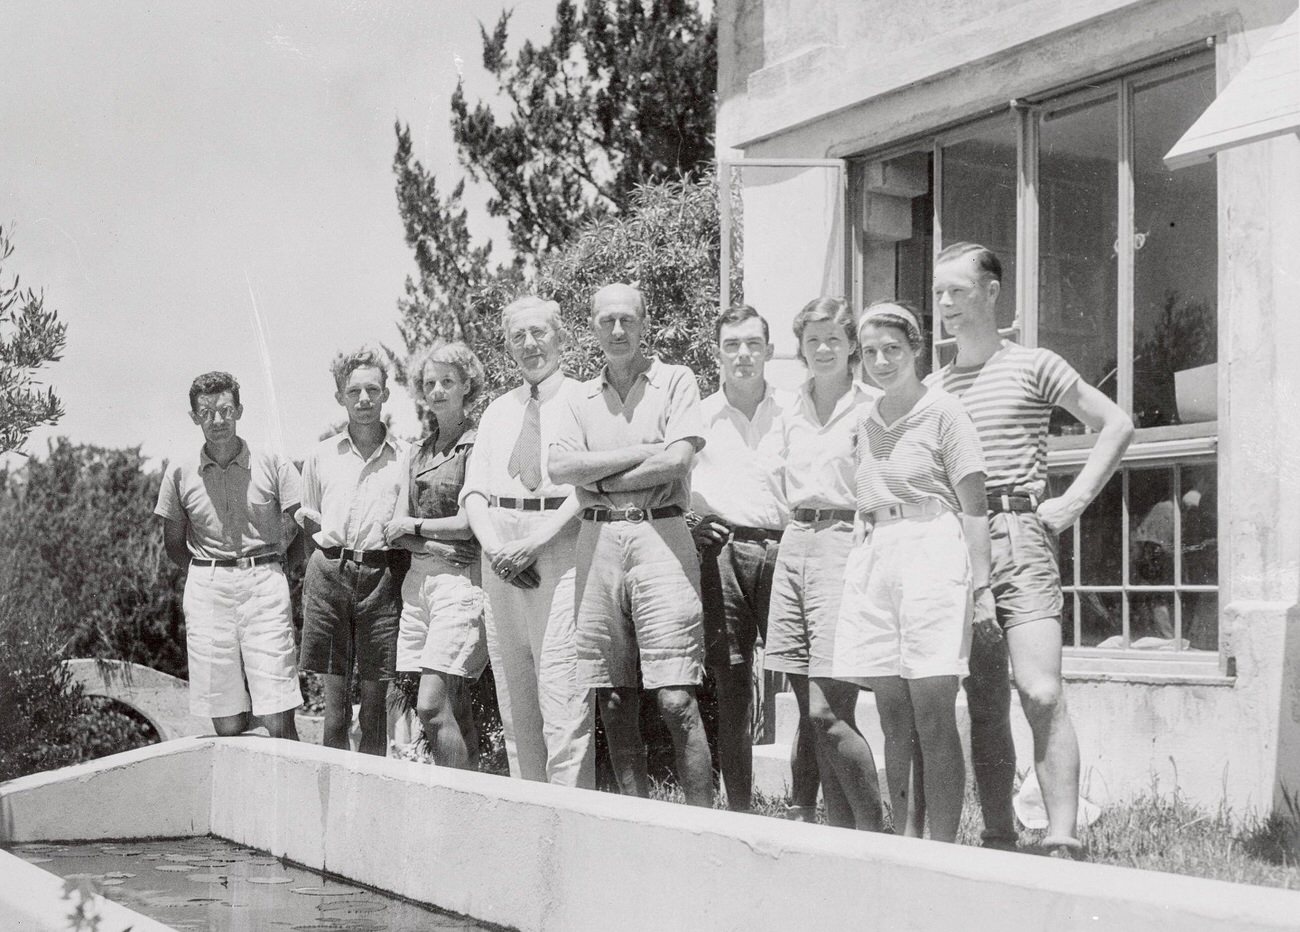 William Beebe with crew in Bermuda, including John Teevan, Gloria Hollister, and Herbert T. Strong.